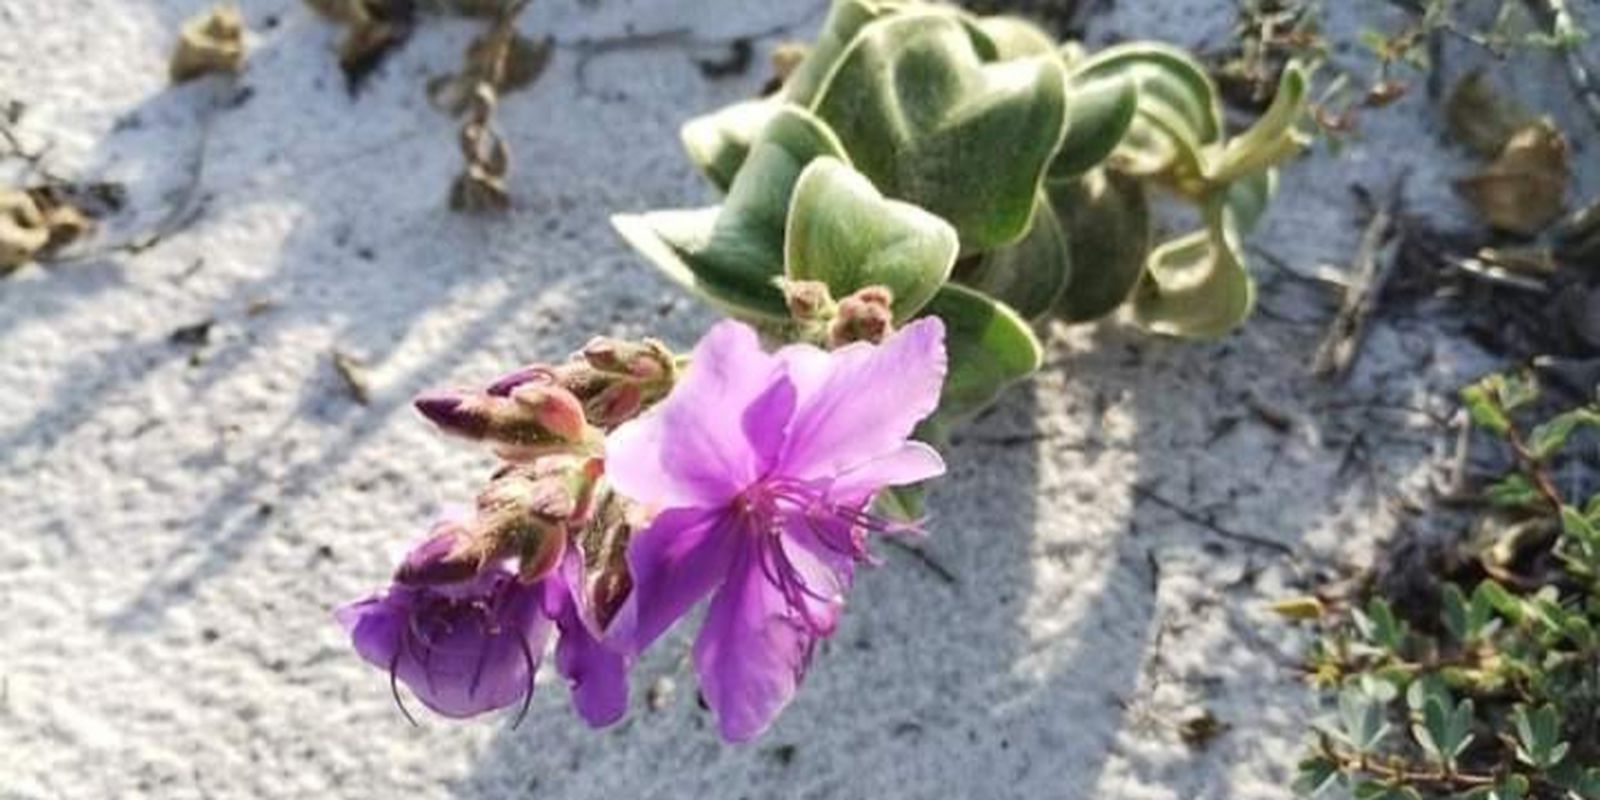 Rare plant species returns to its original environment in Cabo Frio